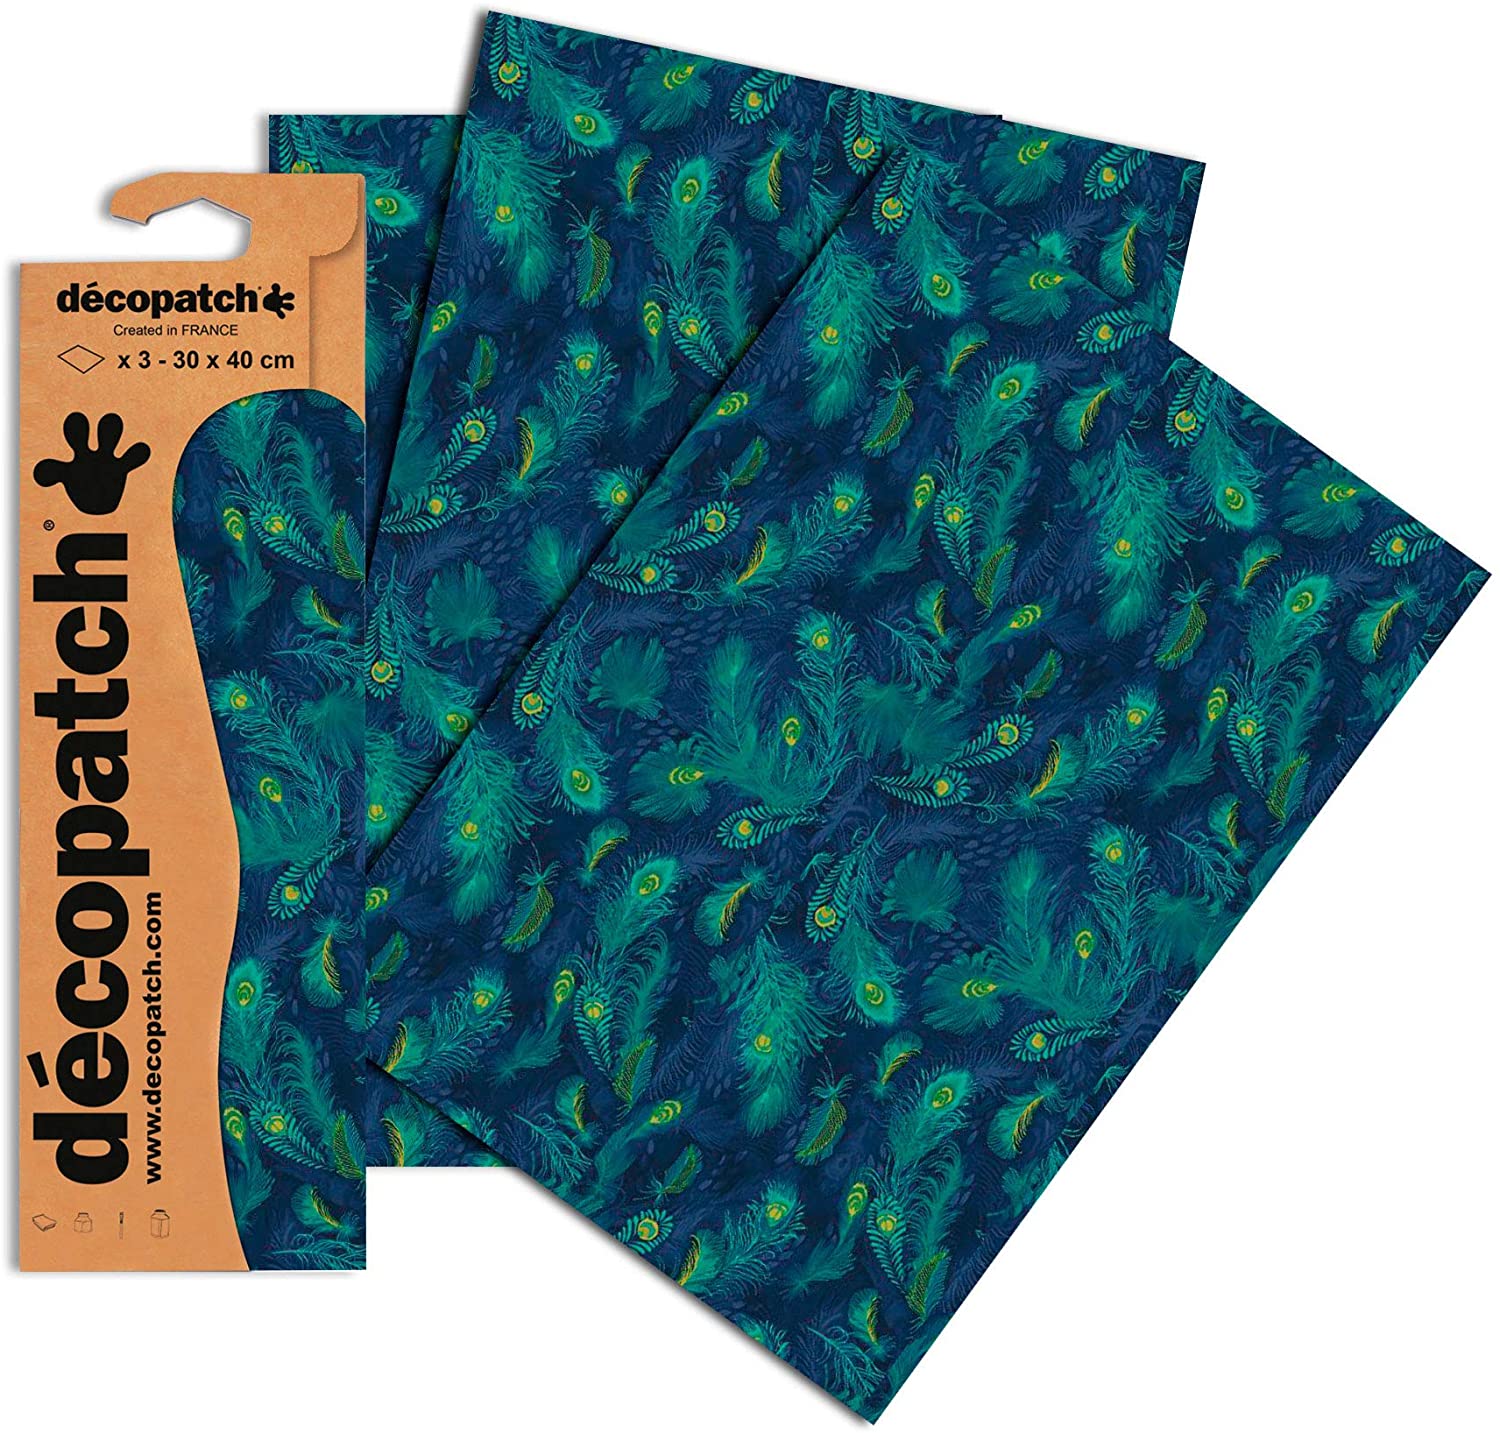 Peacock decopatch paper – Amazon